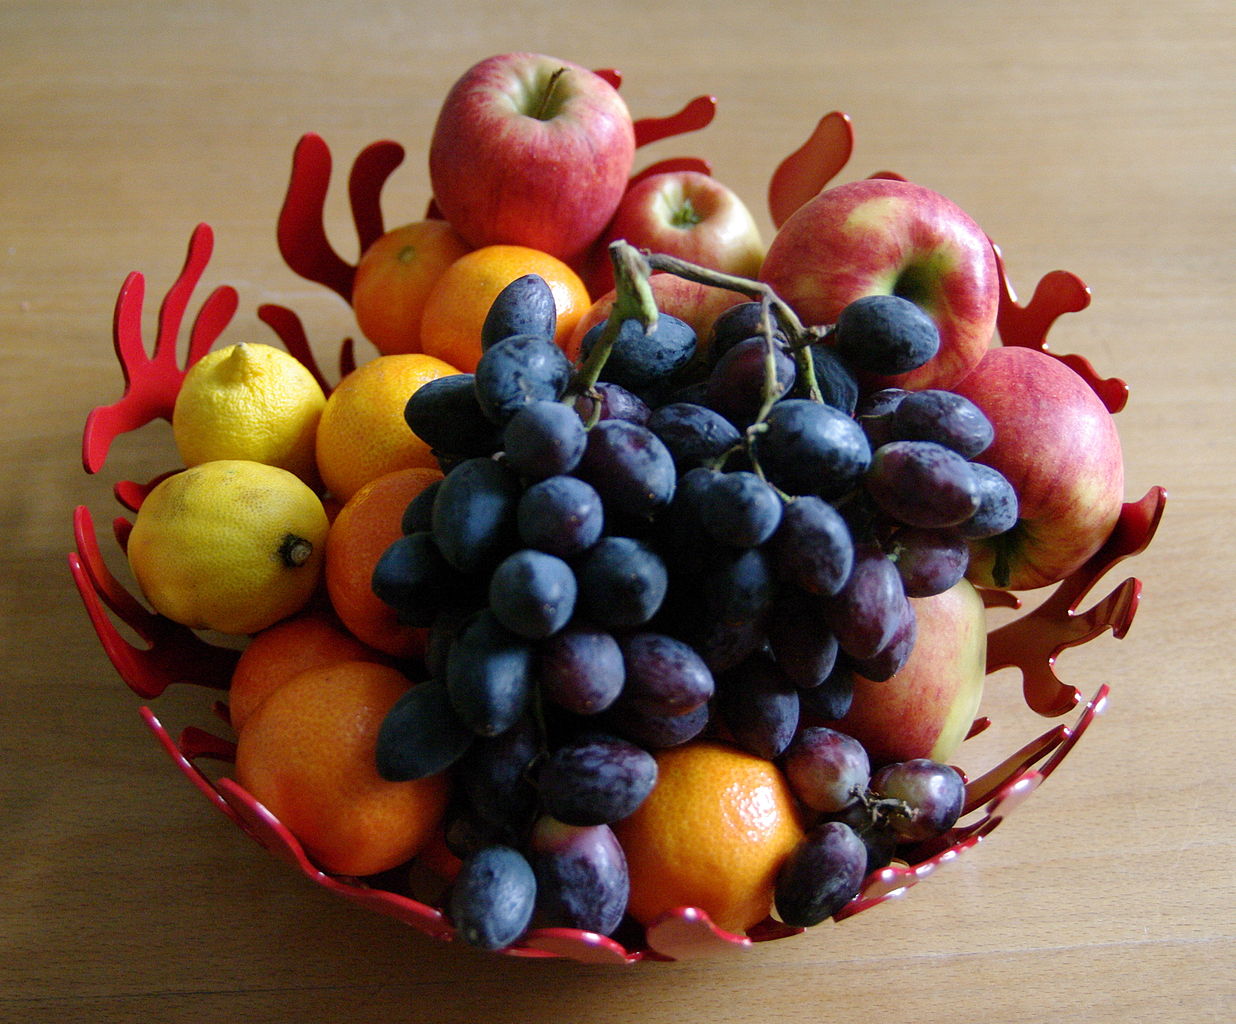 Quelle: https://commons.wikimedia.org/wiki/File:Fruit_basket_alessi.JPG